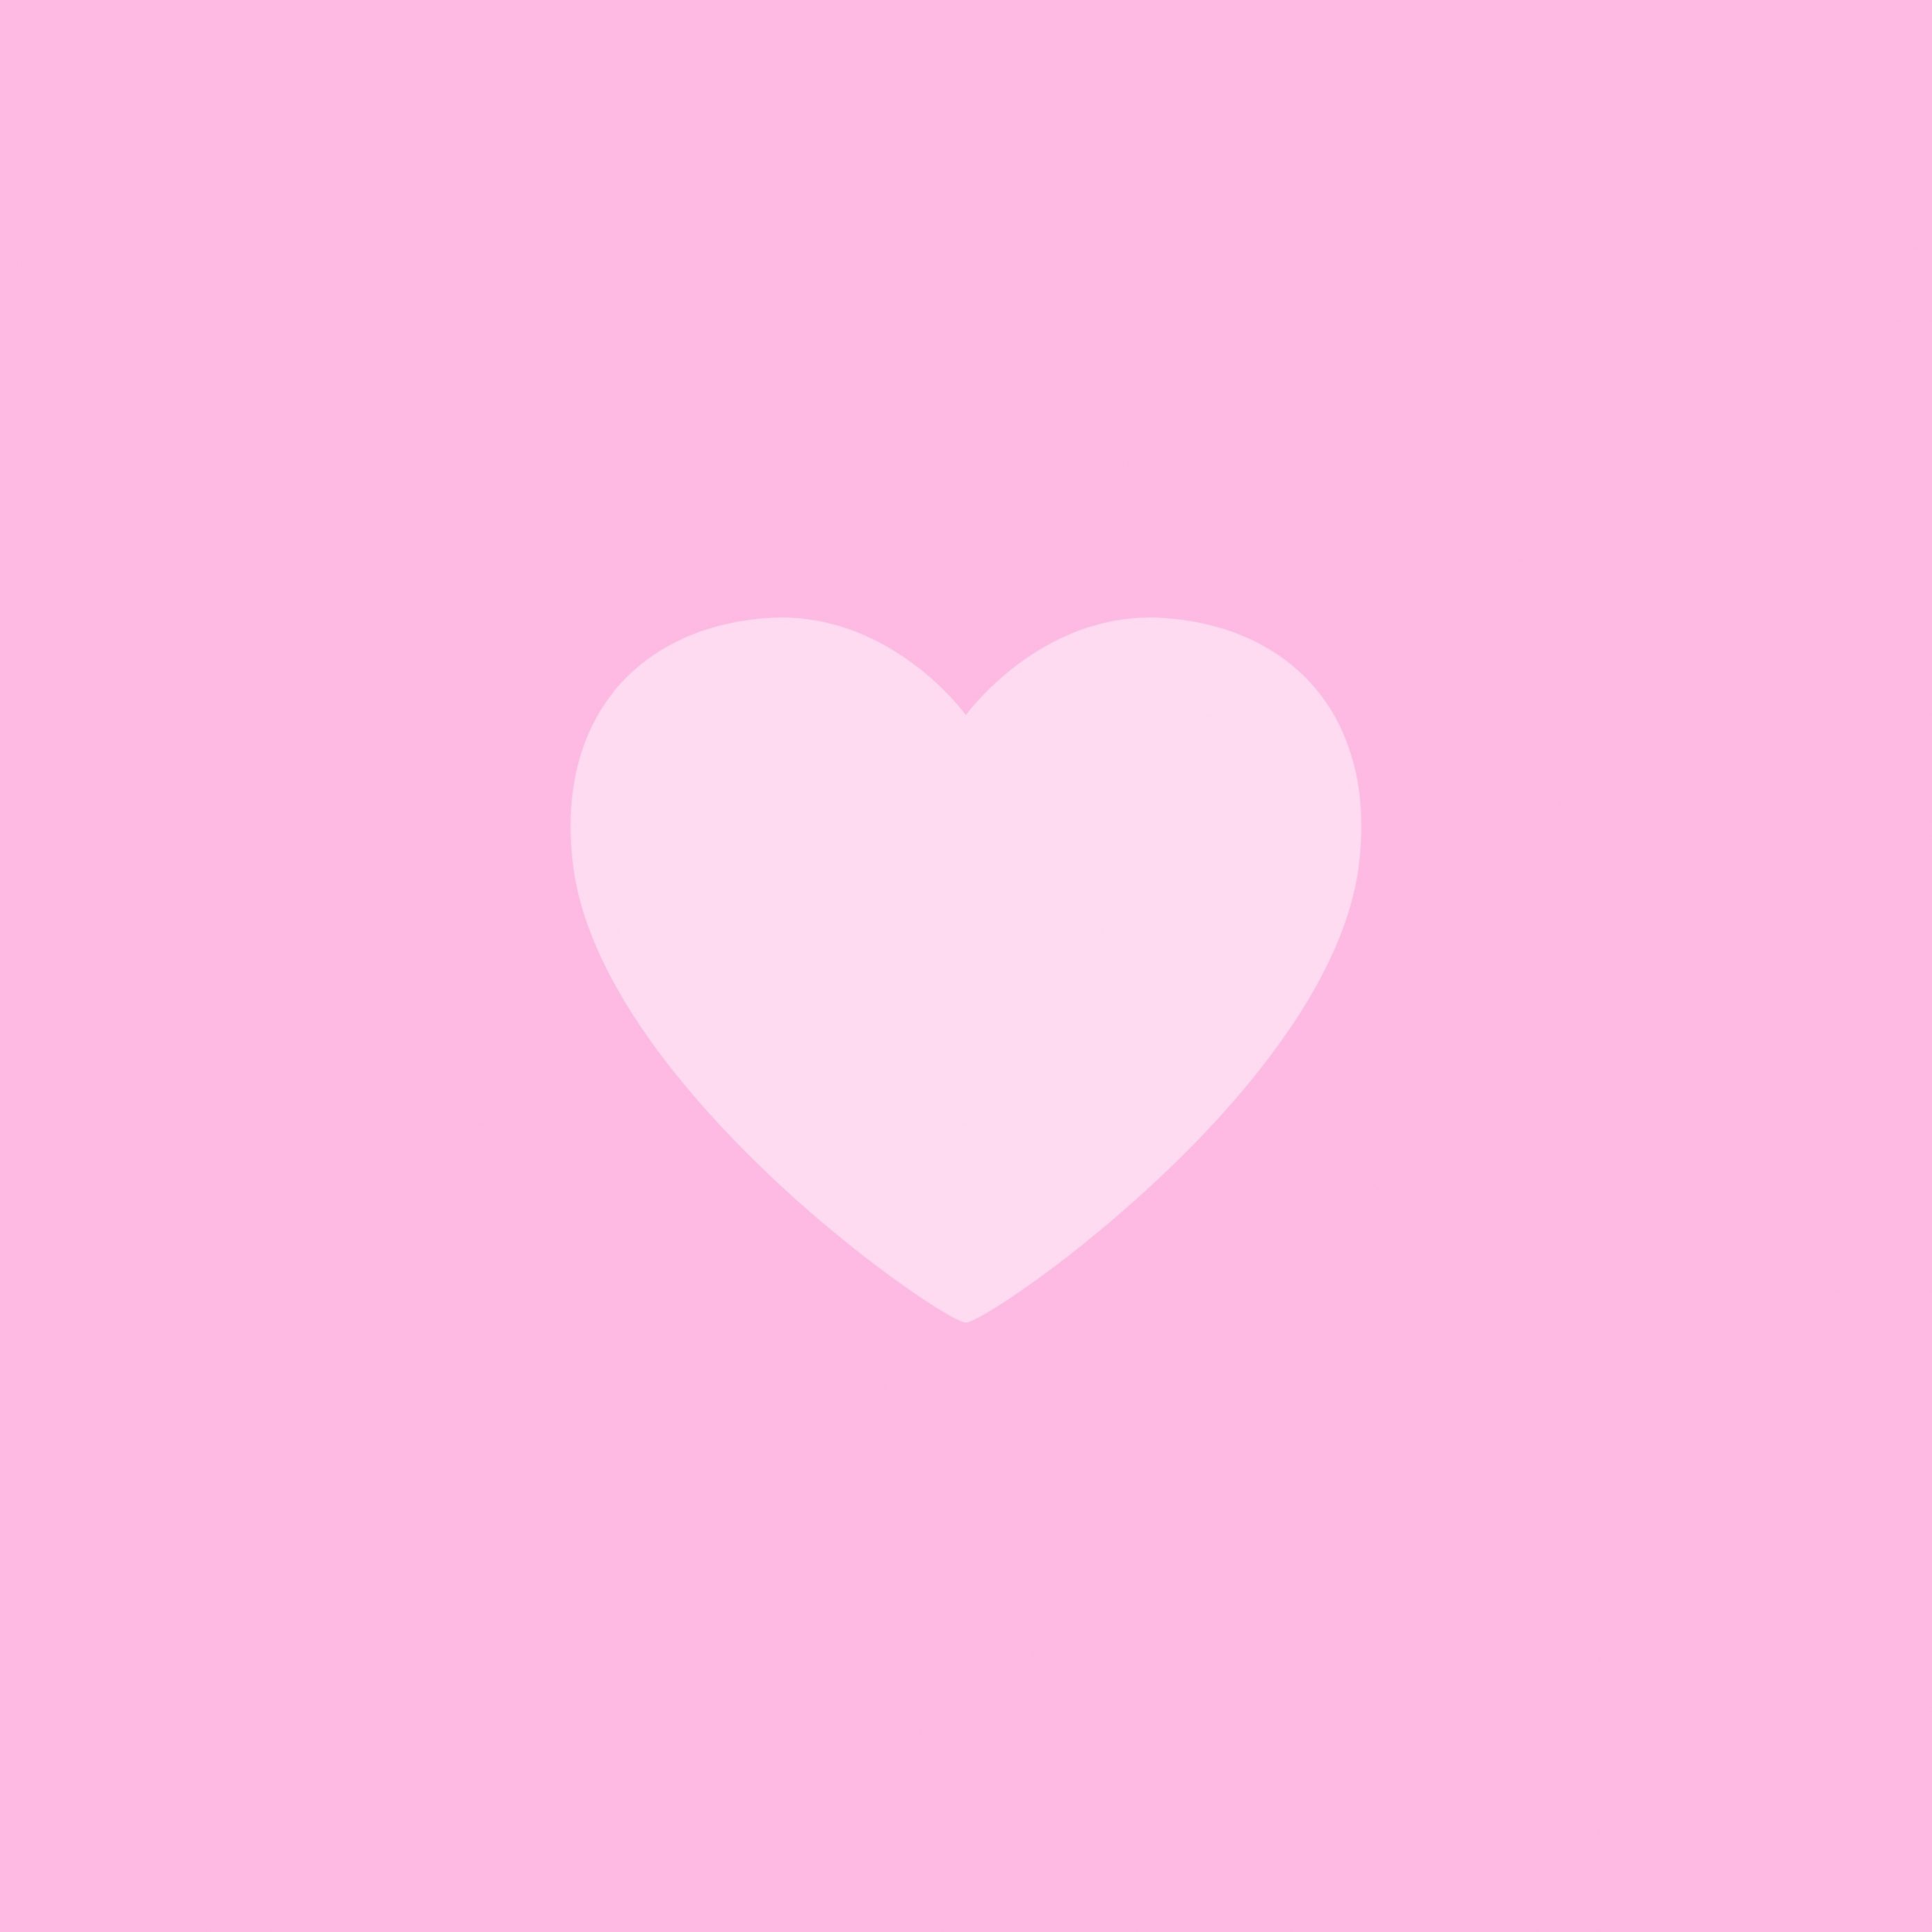 2780x2780 Parallax wallpaper 4k Love Heart Pink Background iPad Wallpaper 2780x2780 pixels resolution